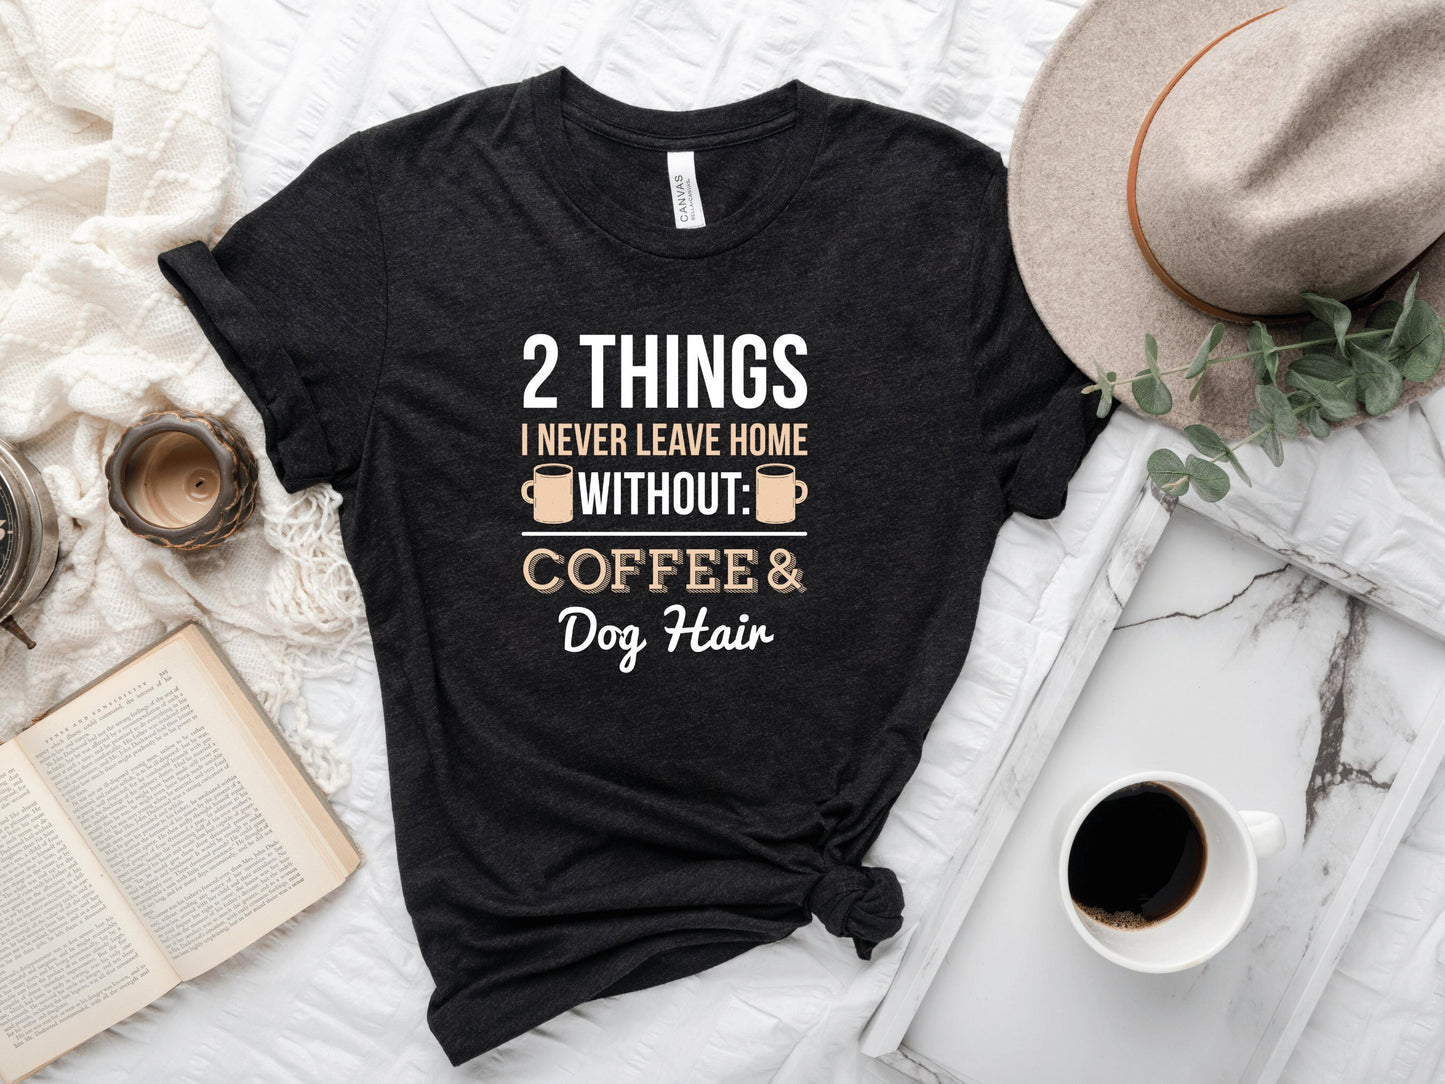 Funny Coffee & Dog Hair Graphic T Shirt, Fun Dog Mom Tee, Coffee Lover Shirt, Typography Dog Dad Tee, Mom Gift Idea, Casual Tee with Saying